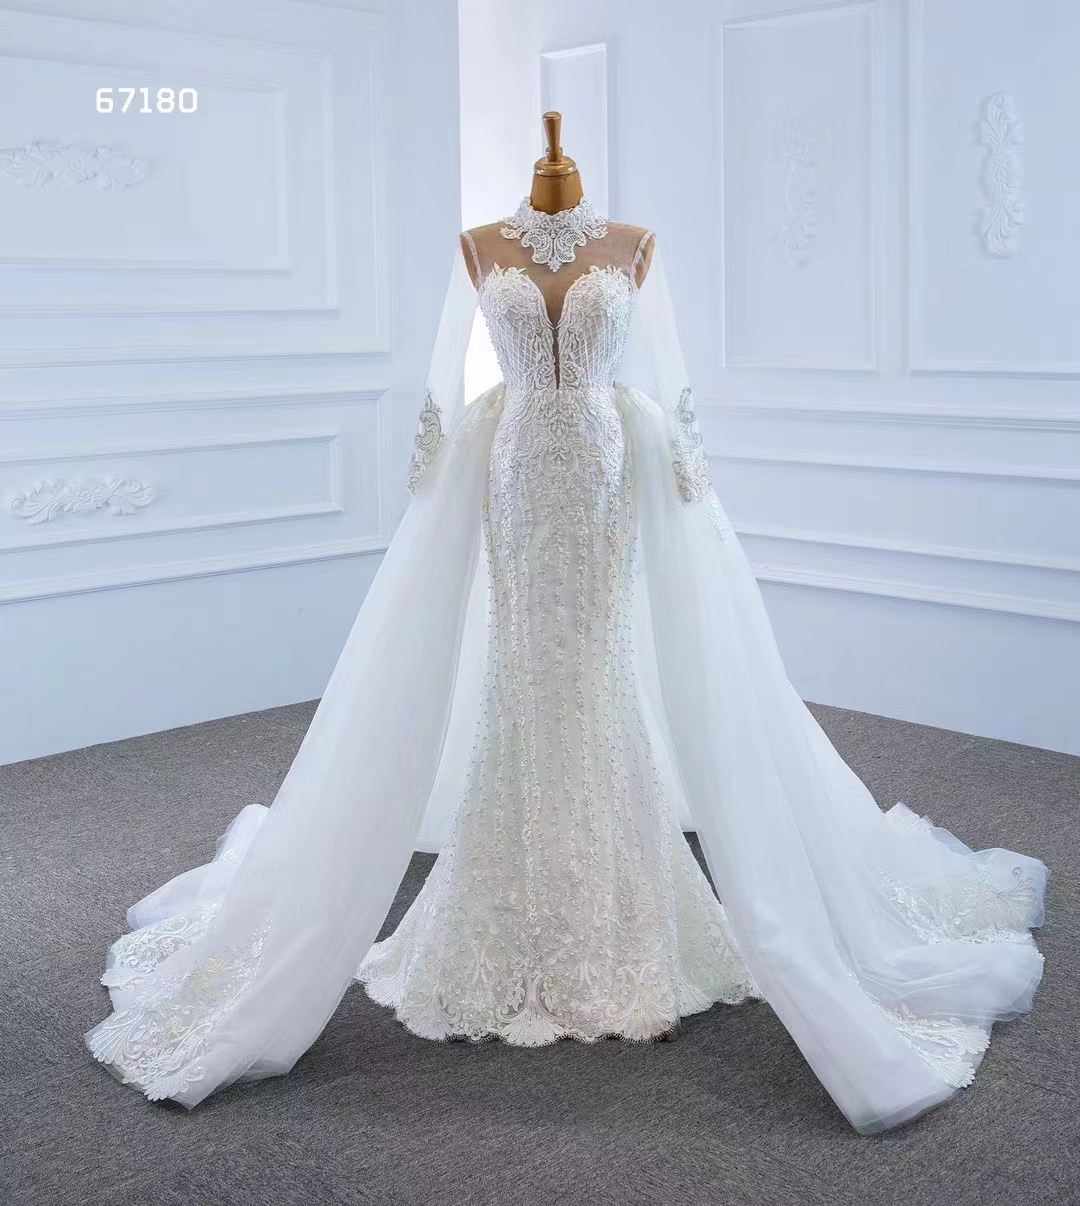 High Neck Quality Mermaid Lace Long Sleeve Detachable Train Wedding Dress Bridal Dress SM67180